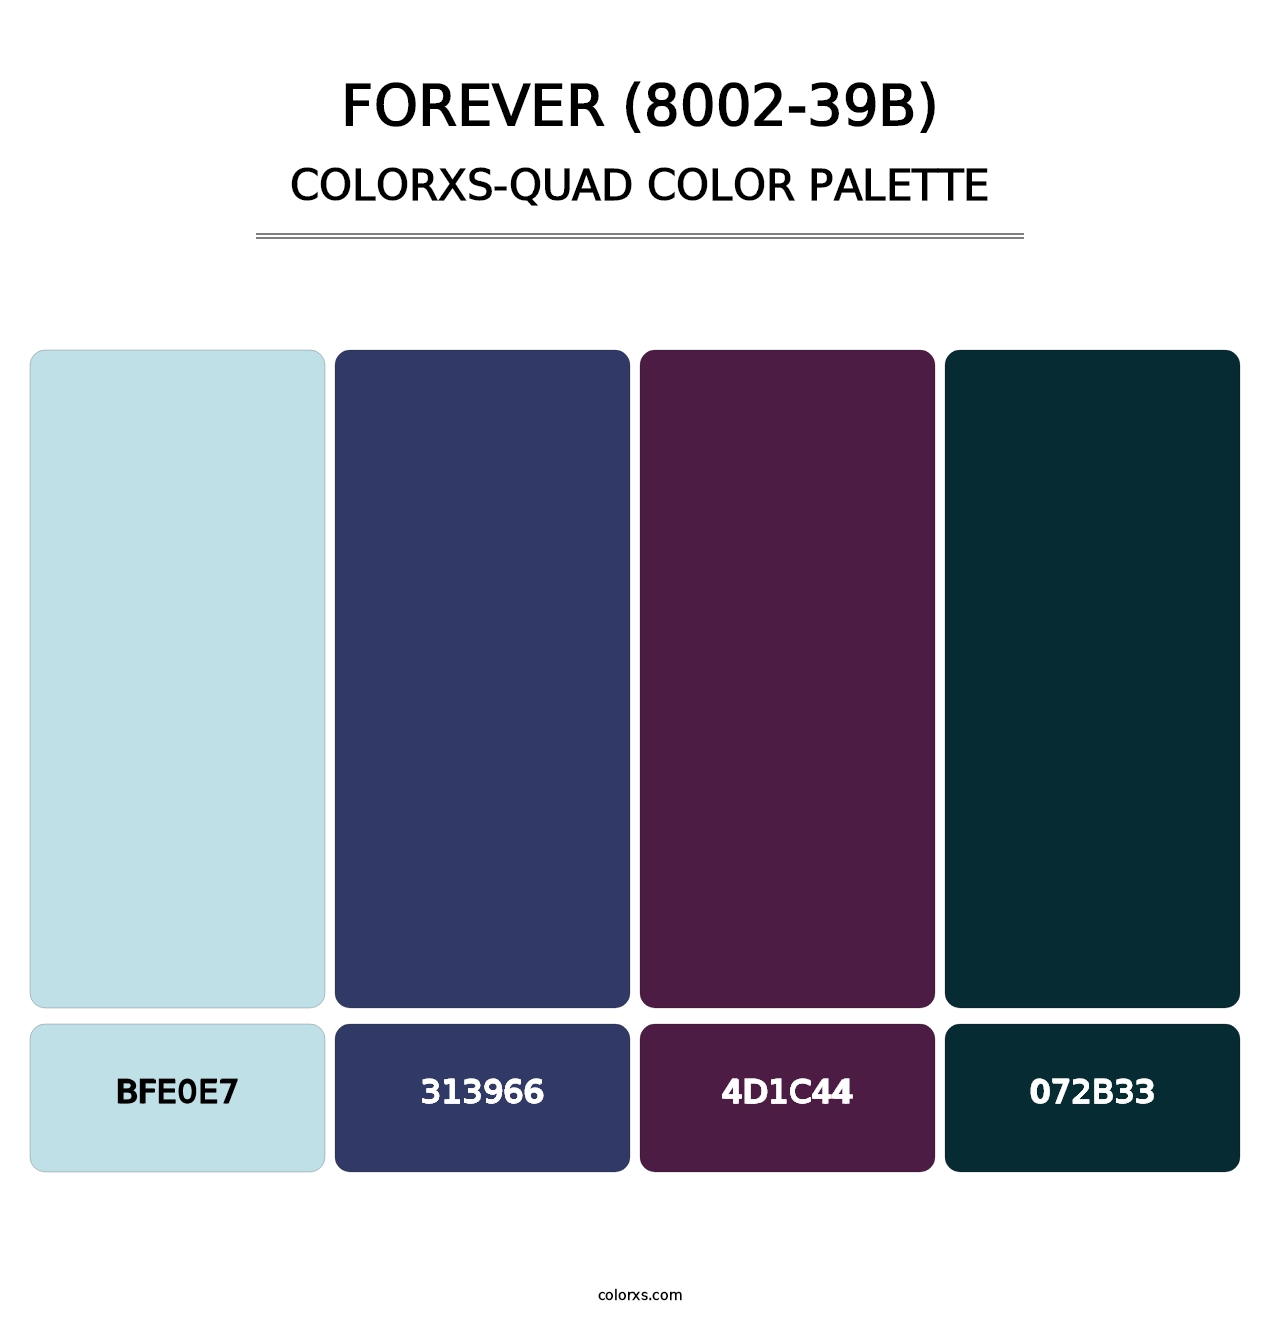 Forever (8002-39B) - Colorxs Quad Palette